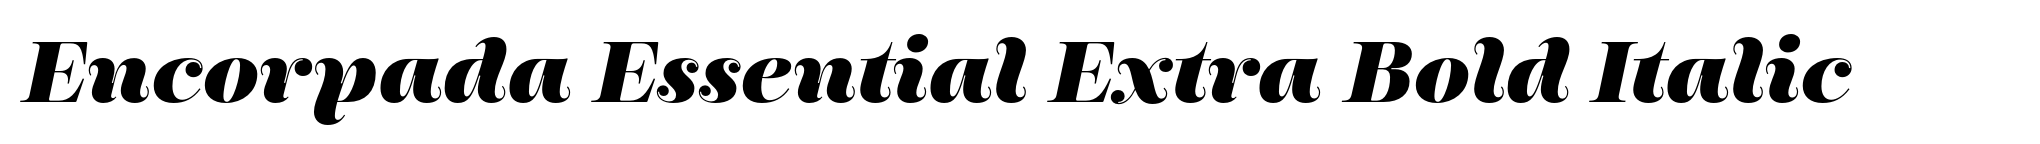 Encorpada Essential Extra Bold Italic image